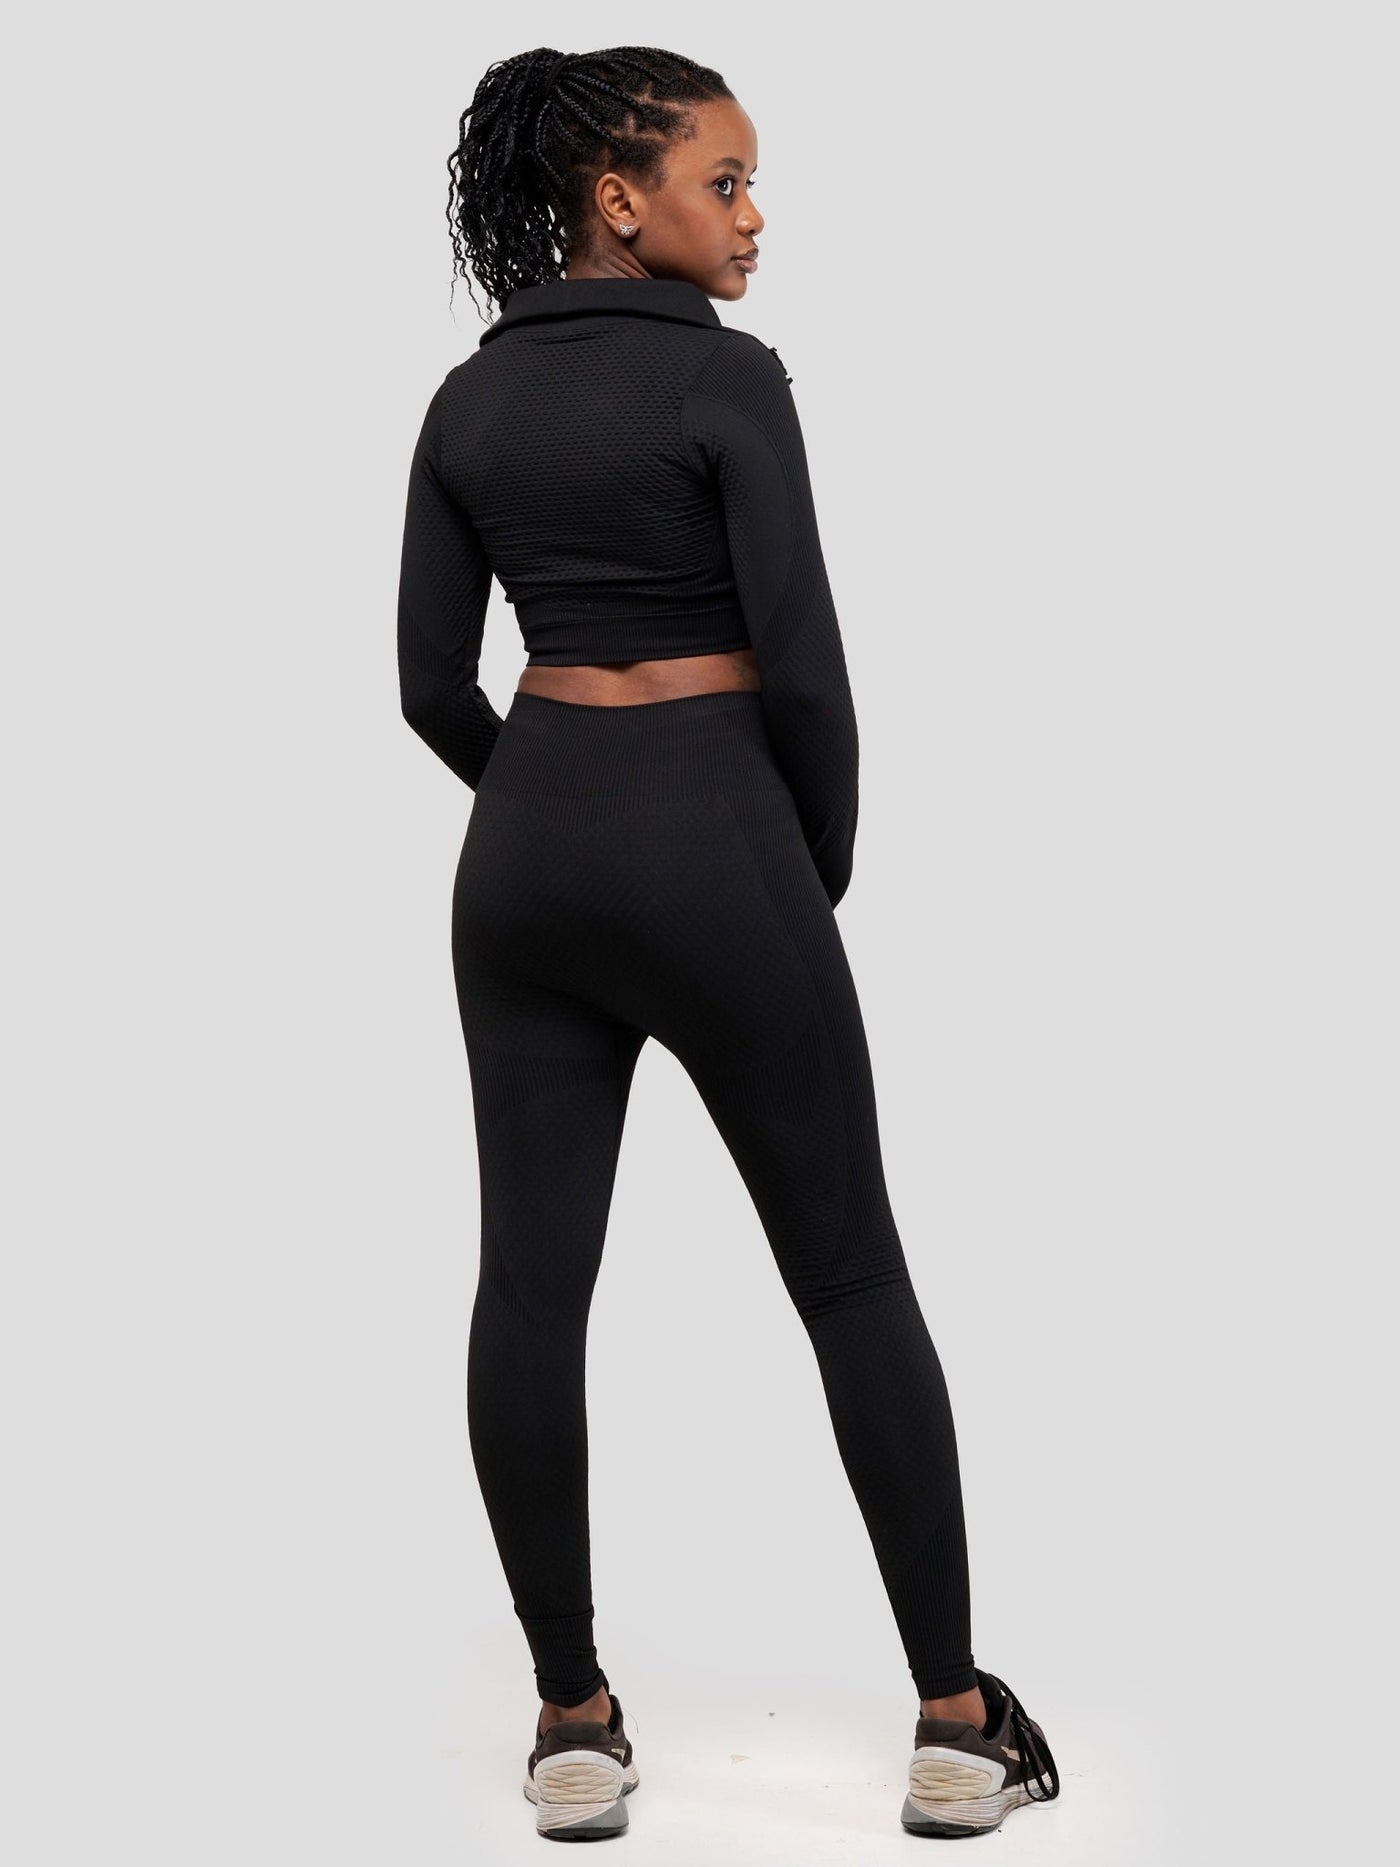 Ava Fitness Elenah High Waisted Leggings - Black - Shopzetu